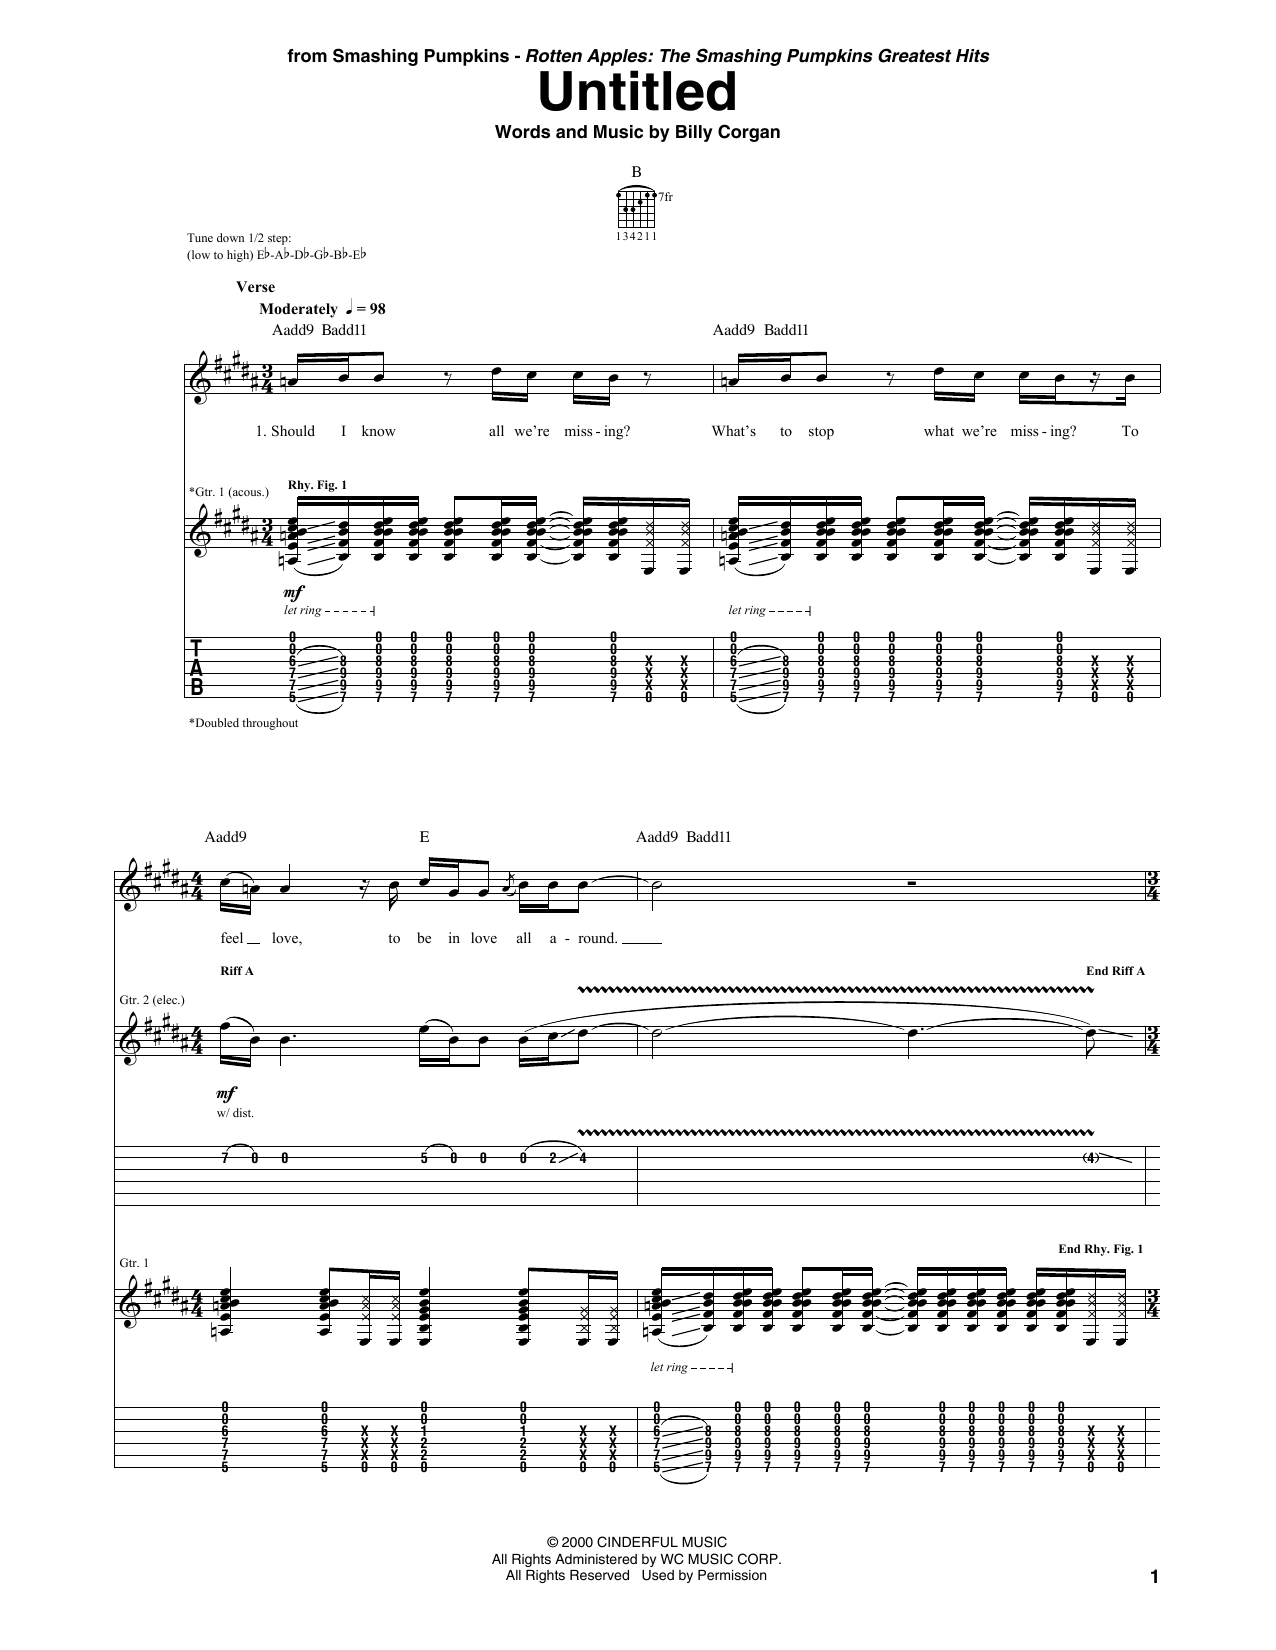 The Smashing Pumpkins Untitled Sheet Music Notes & Chords for Guitar Tab - Download or Print PDF